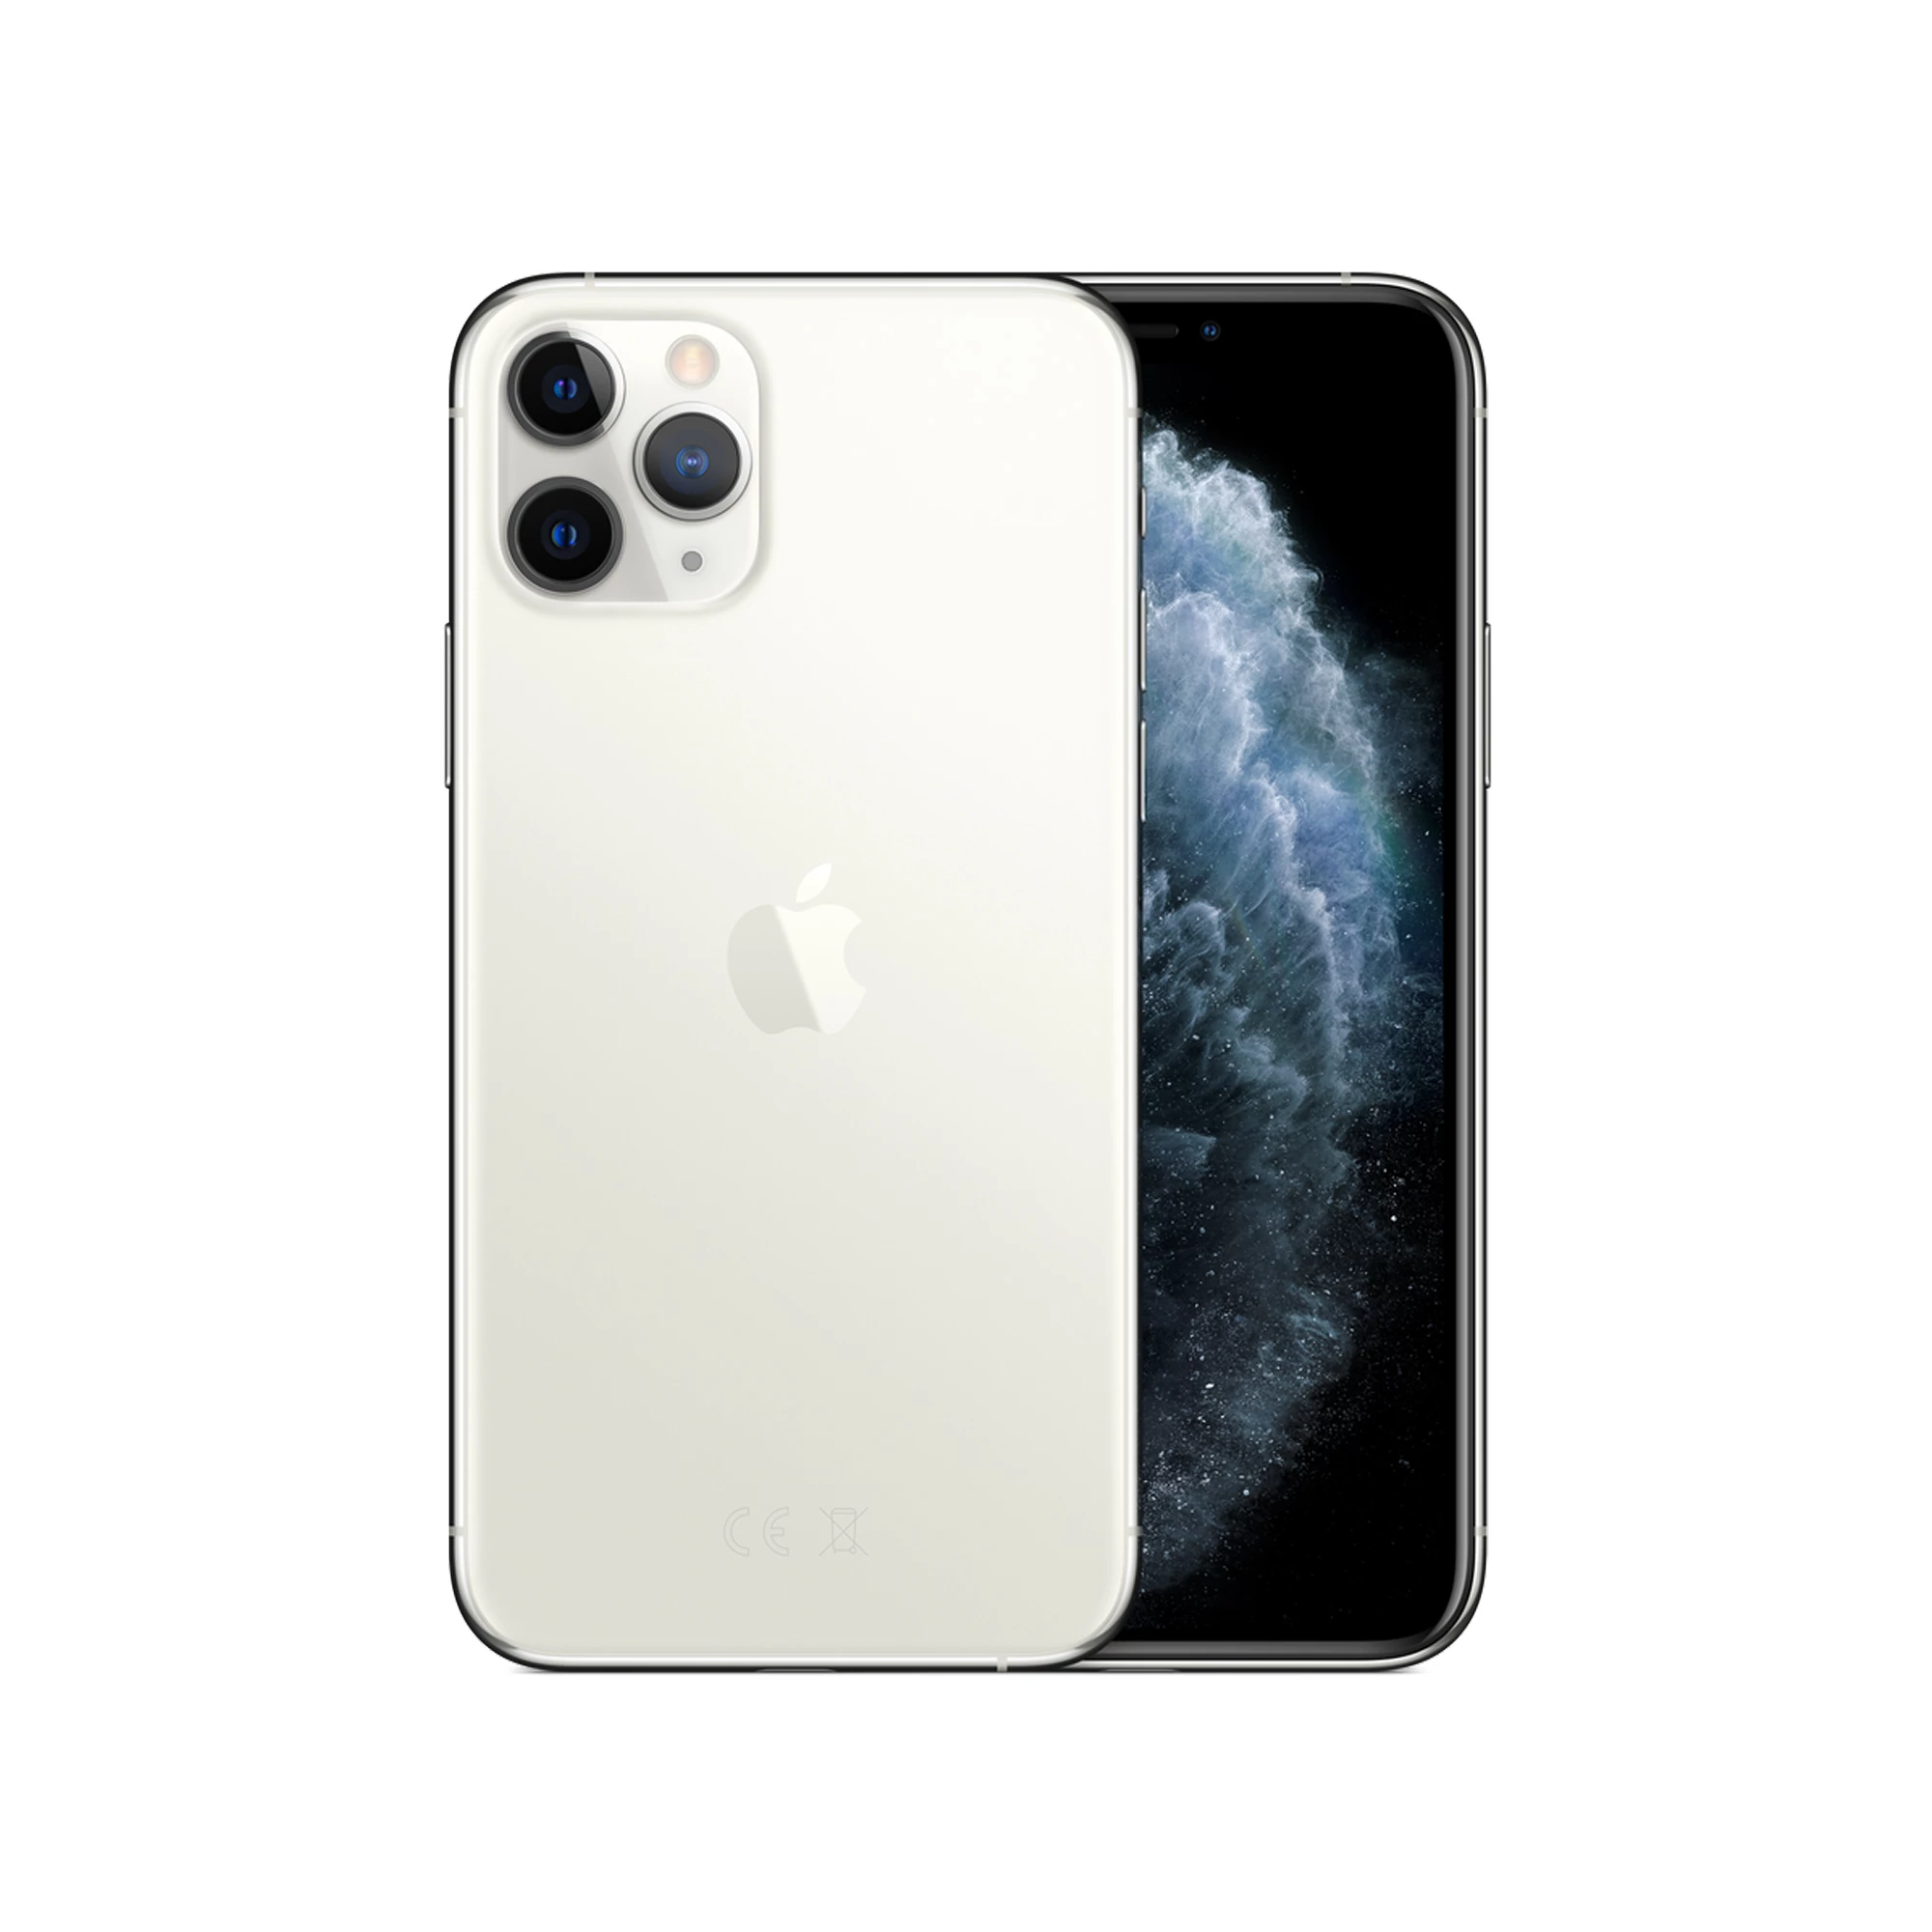 Apple iPhone 11 Pro Dual Sim 64GB Silver (MWDA2)